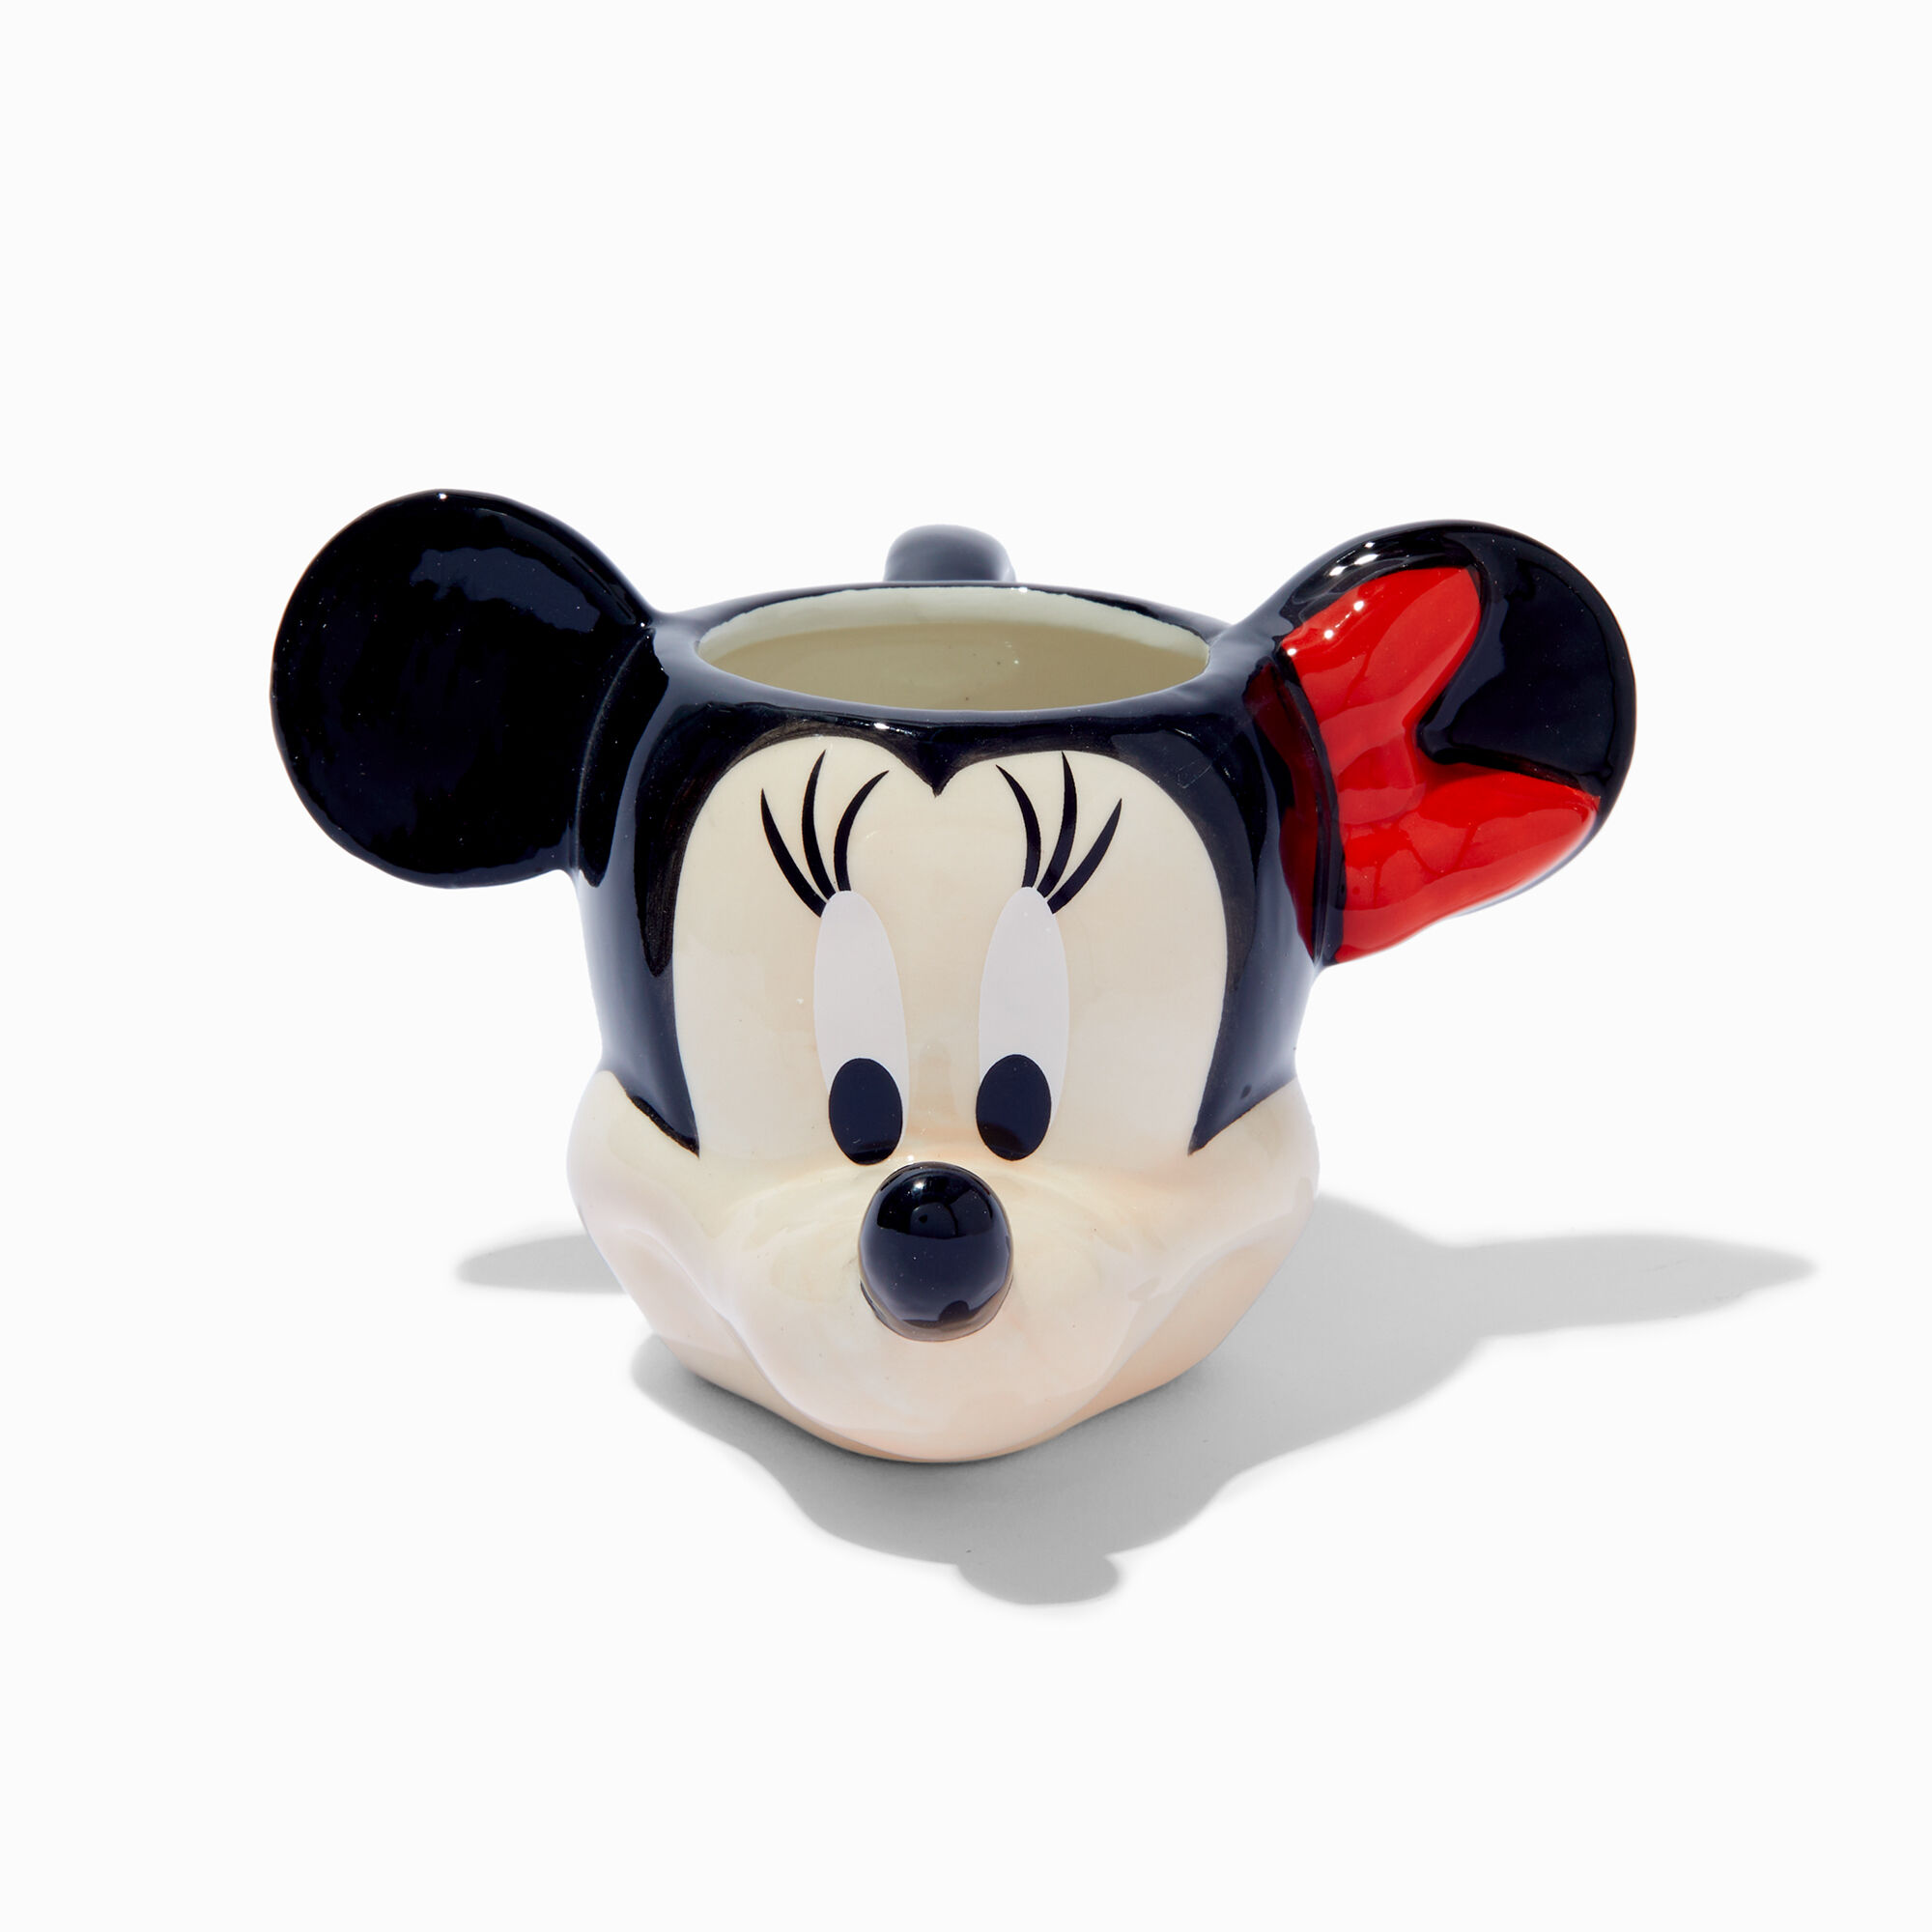 View Claires Disney 3D Minnie Mouse Mug information